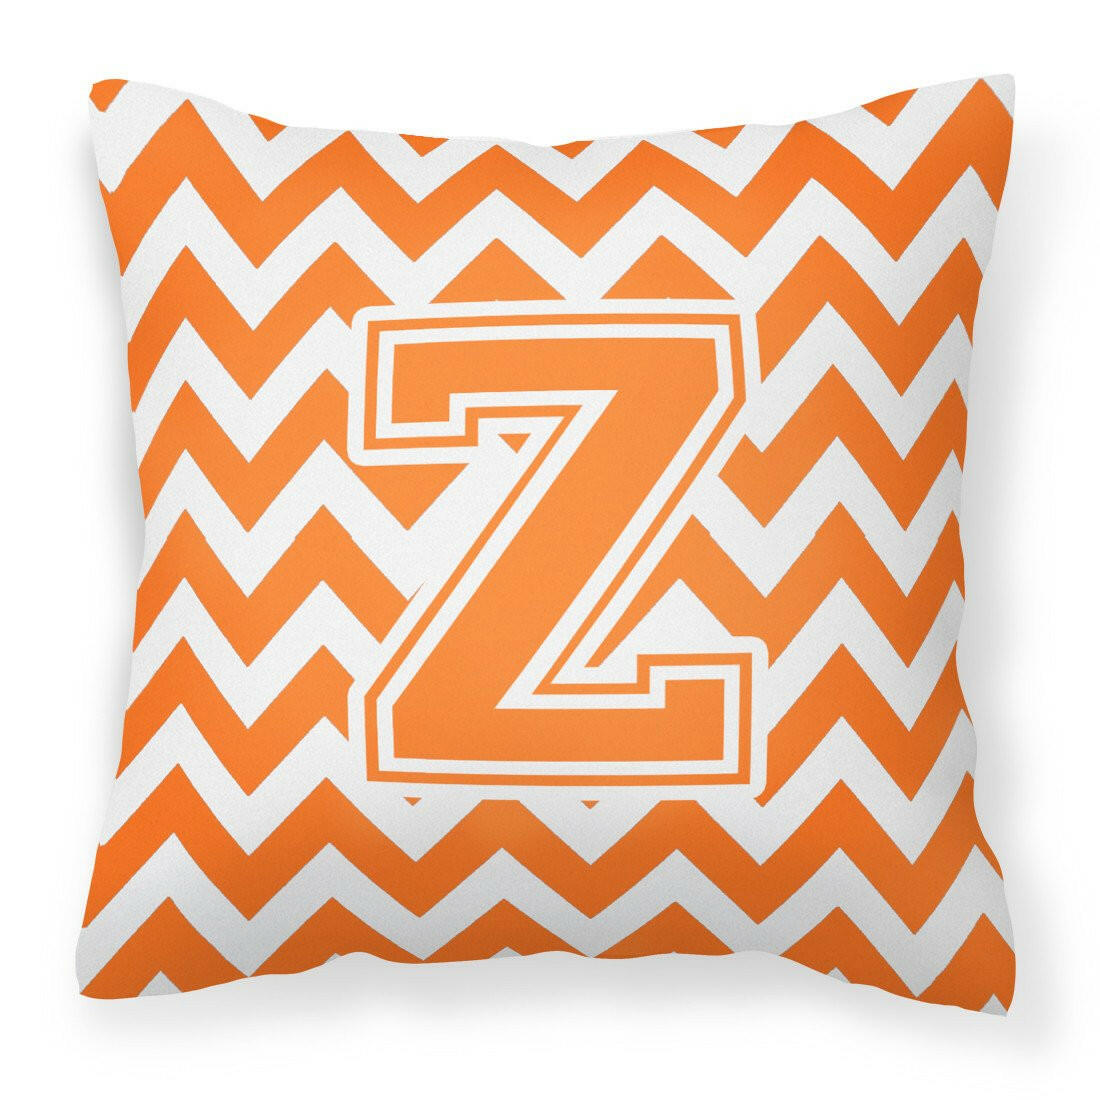 Letter Z Chevron Orange and White Fabric Decorative Pillow CJ1046-ZPW1414 by Caroline's Treasures